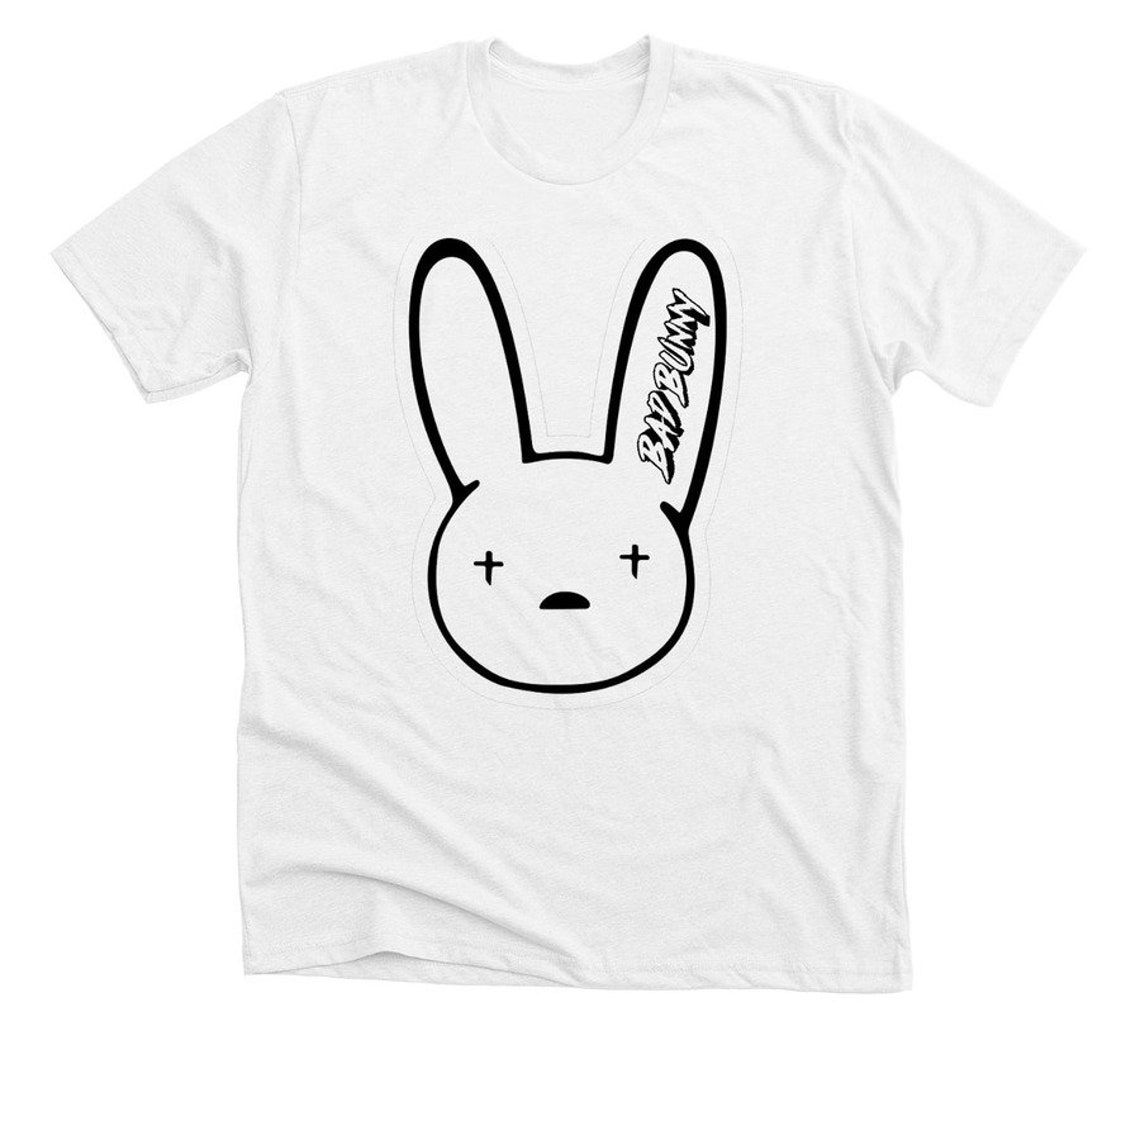 Bad Bunny logo t-shirt kids | Etsy